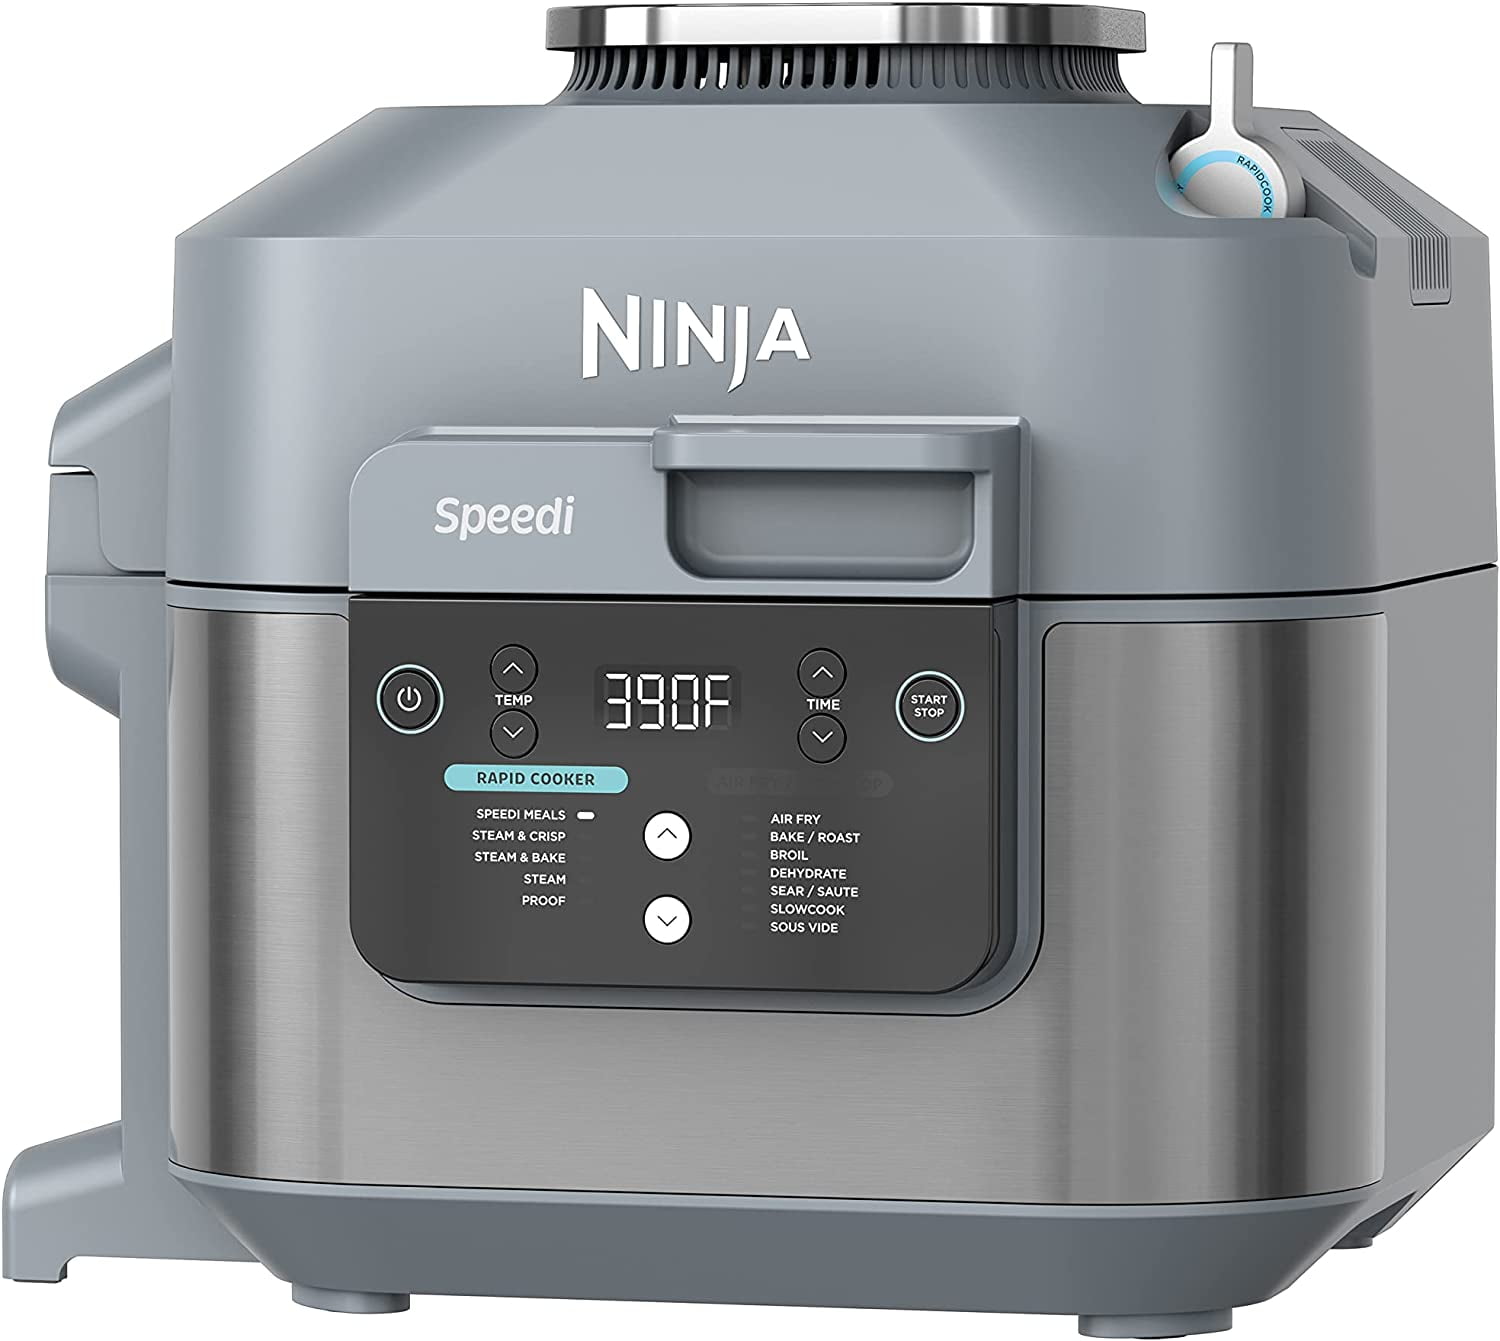 Ninja's 6.5-qt. 14-in-1 pressure air fryer hits one of its best